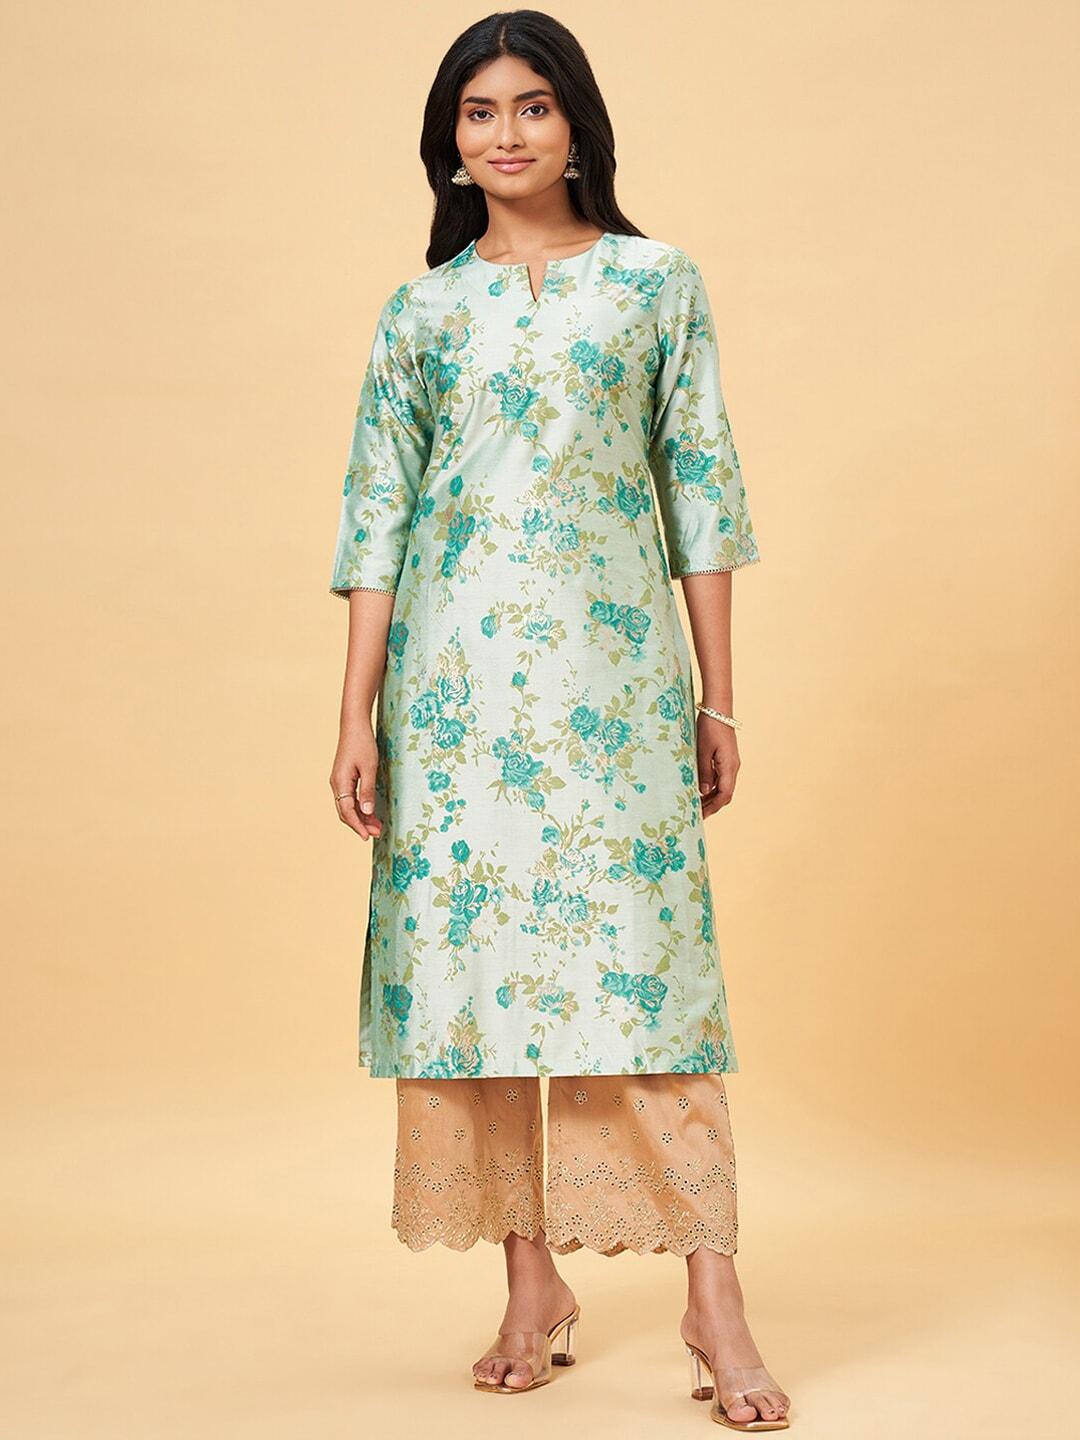 rangmanch by pantaloons women floral printed keyhole neck flared sleeves kurta